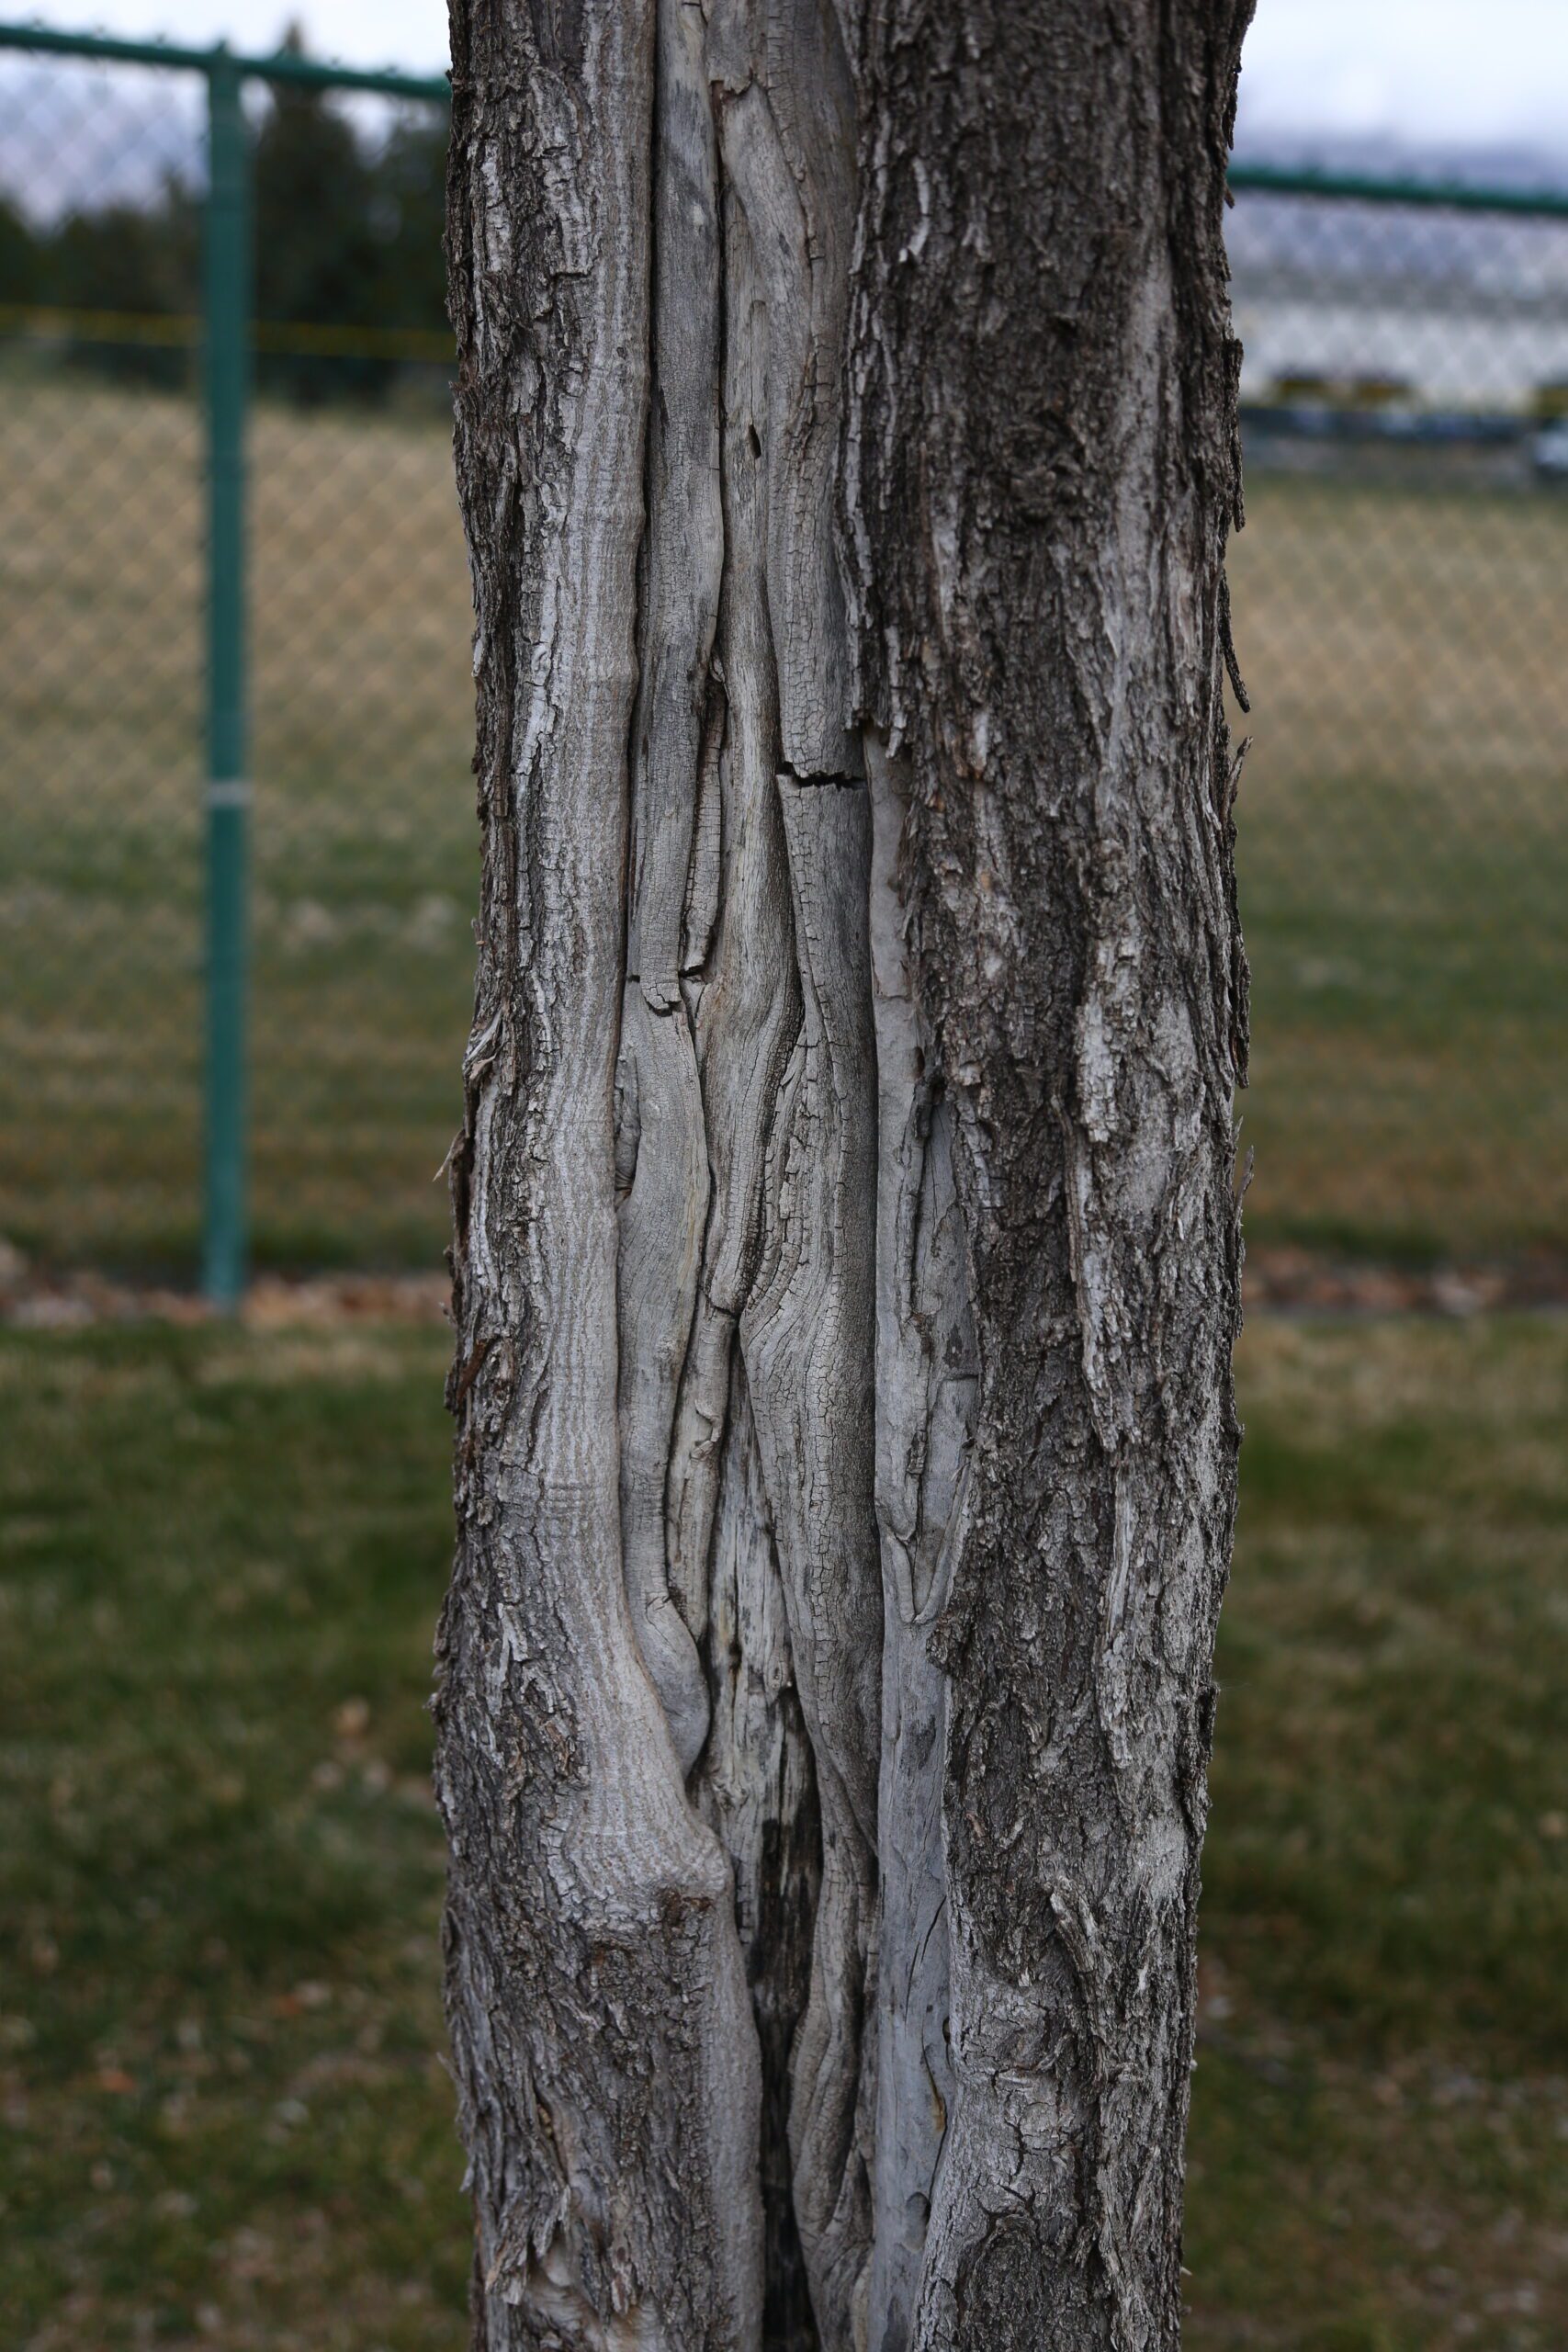 closeup of sunscald damage on a tree trunk